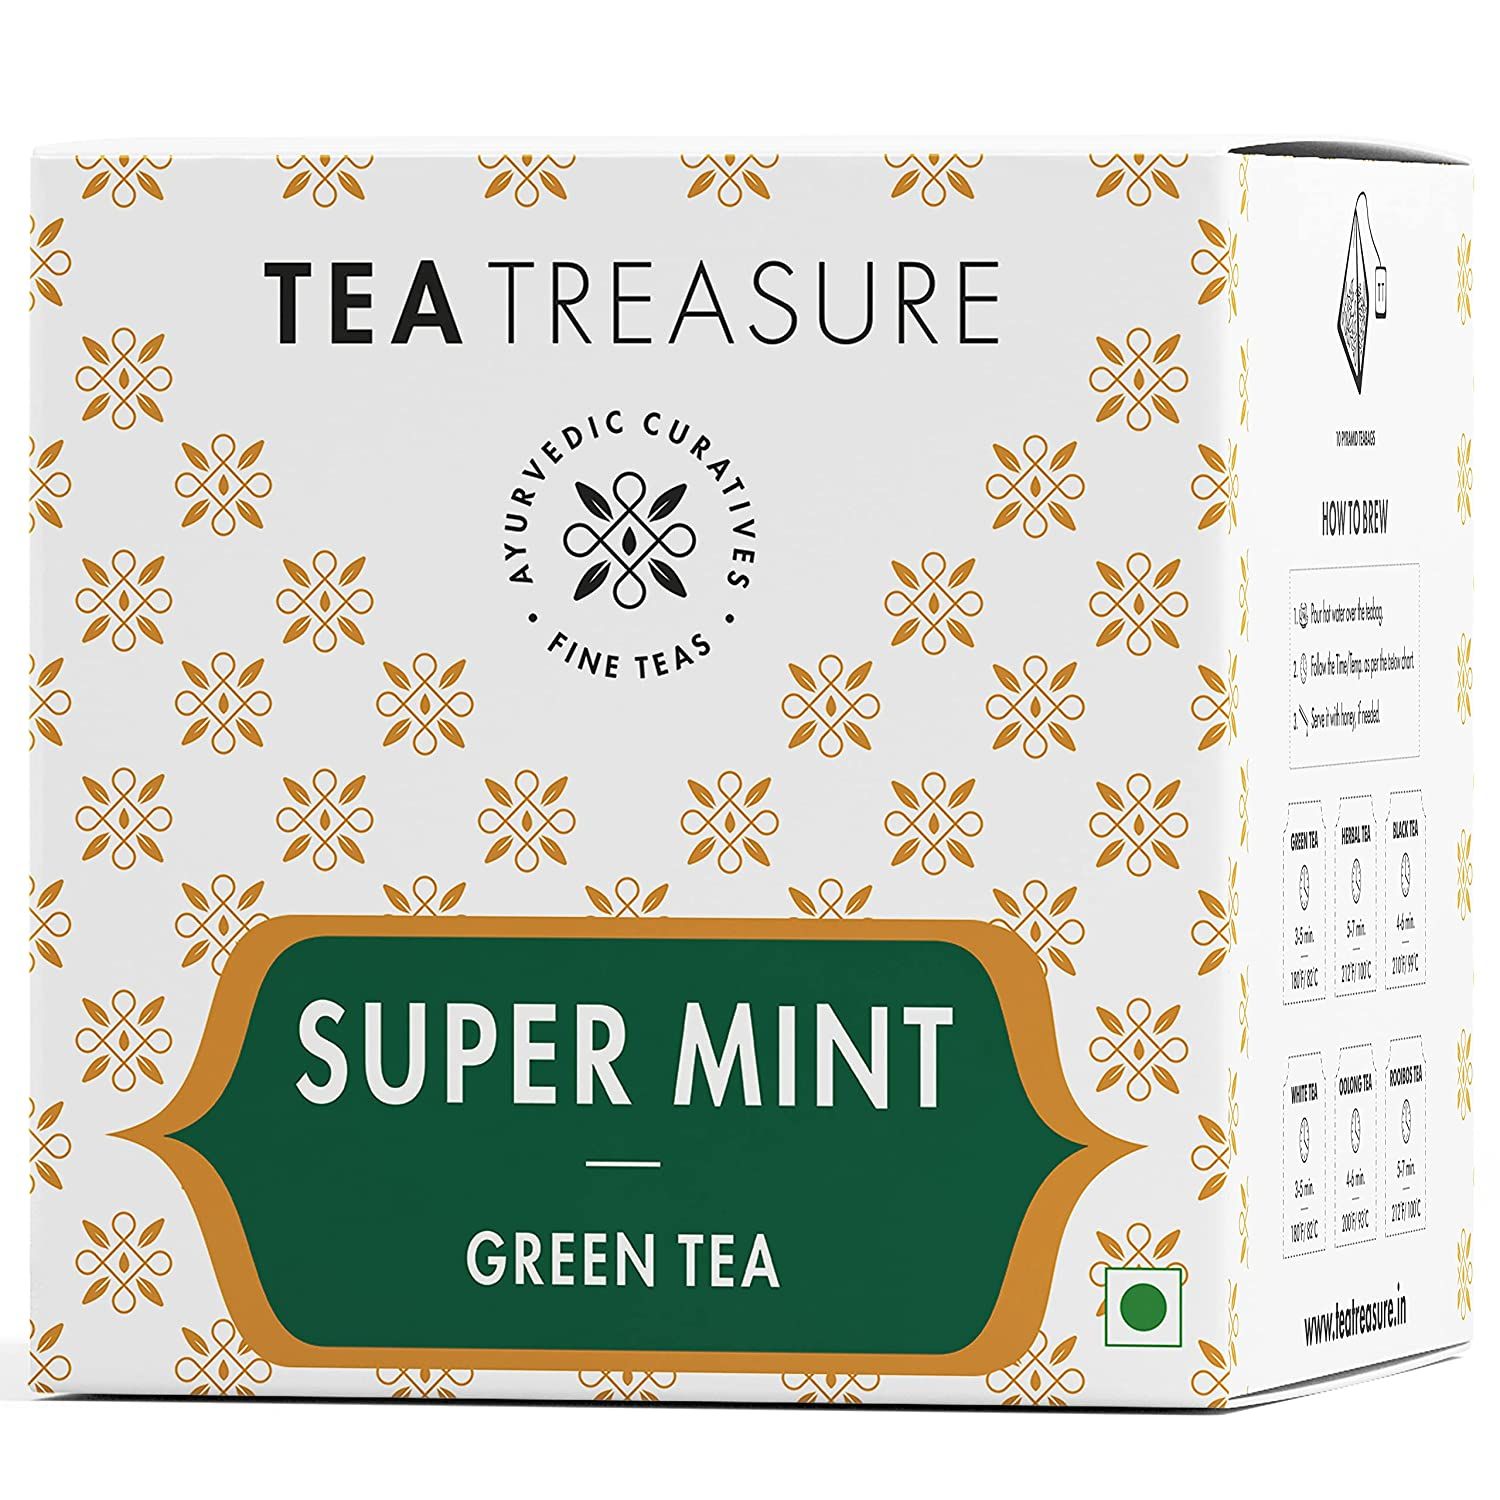 PG Tips Peppermint Tea Envelops (Pack 25) - FW829 - Buy Online at Nisbets